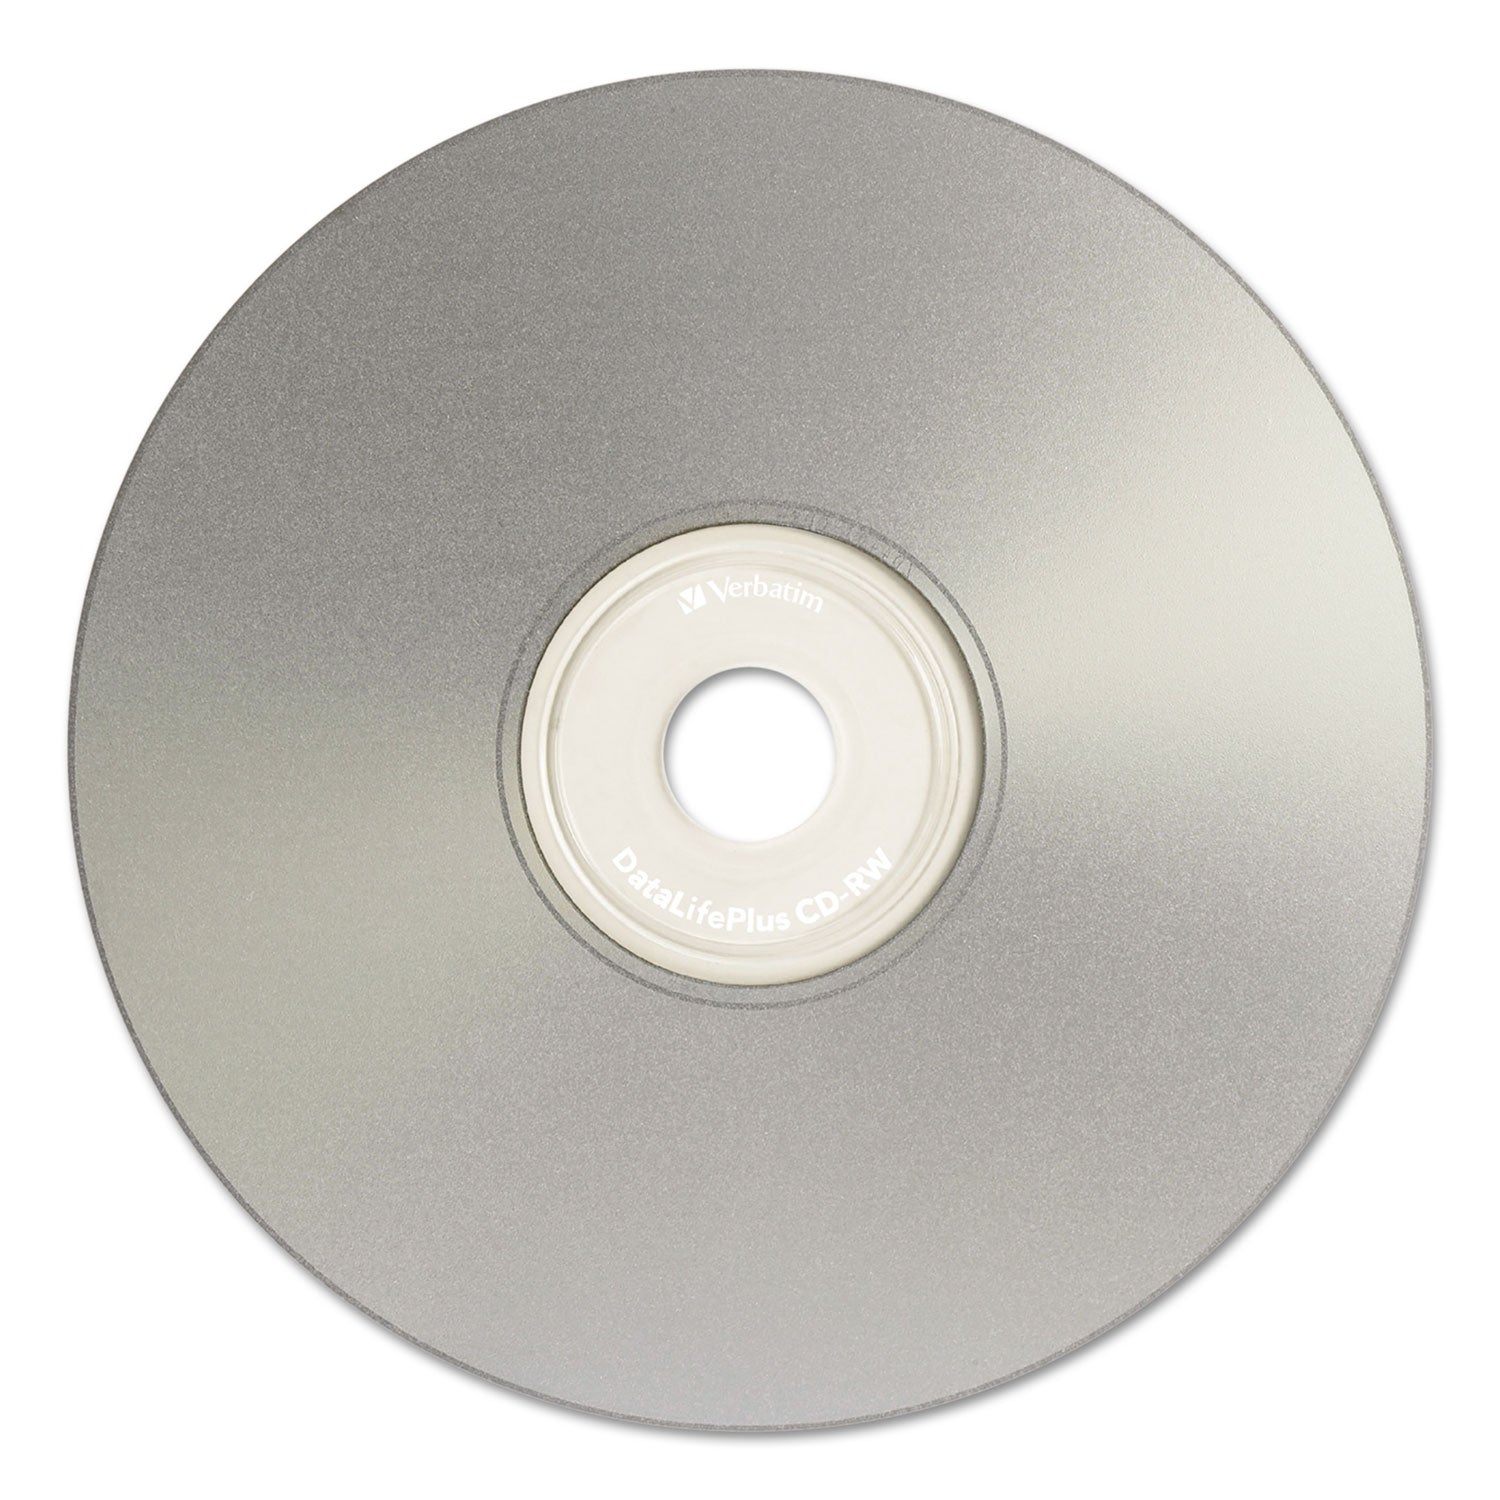 CD-RW DataLifePlus Printable Rewritable Disc, 700 MB/80 min, 12x, Spindle, Silver, 50/Pack - 